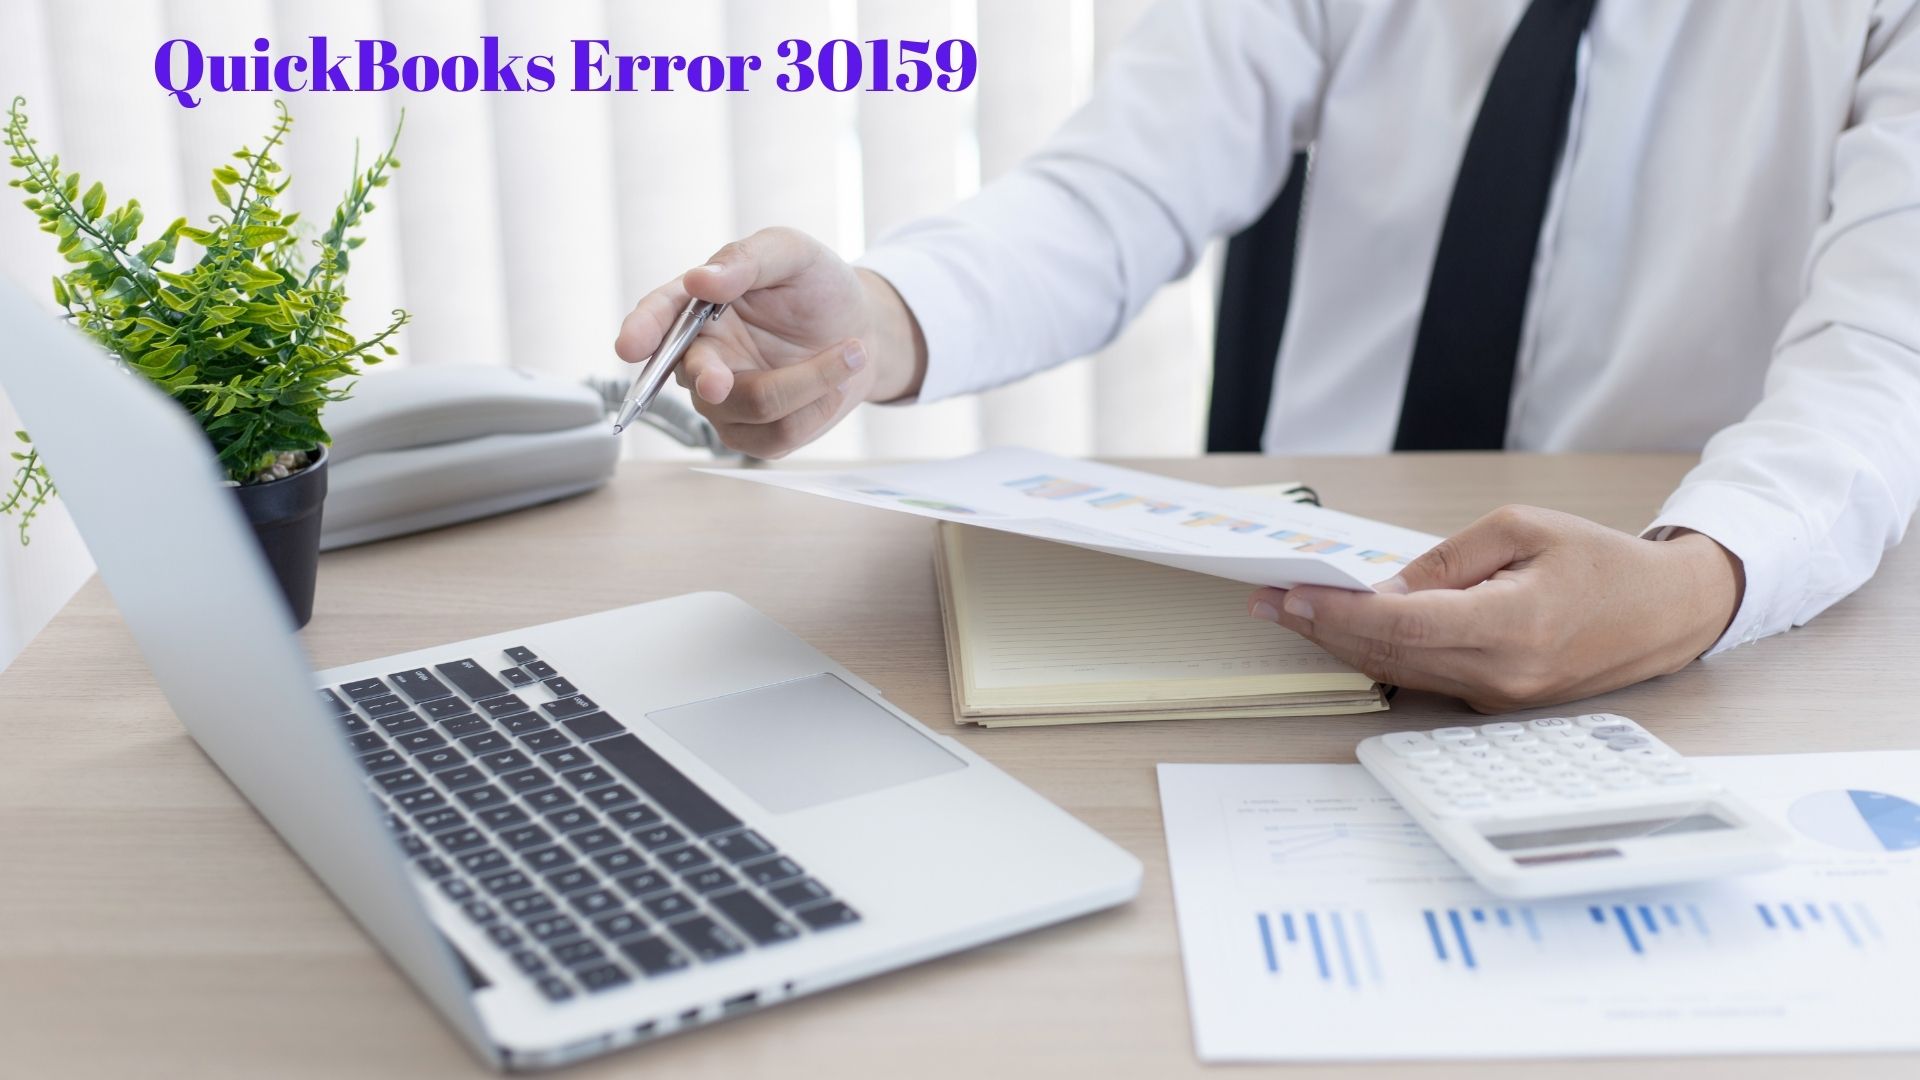 Remedies for Resolving Quickbooks Error 30159